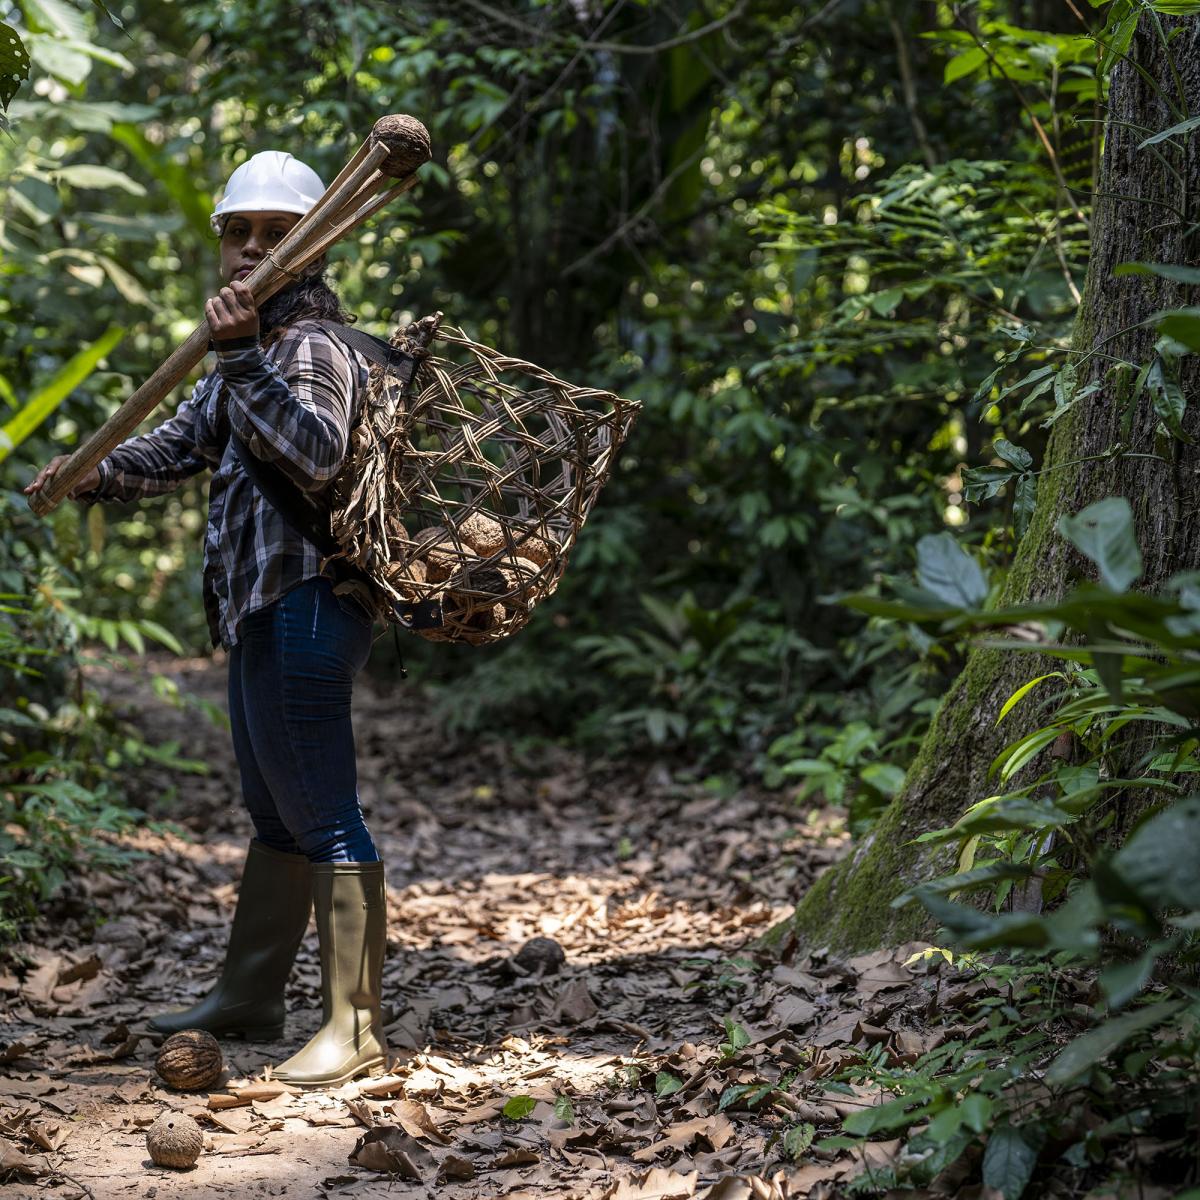 Yacxeri walking on the Amazon rainforest carrying a basket full of Brazil nut